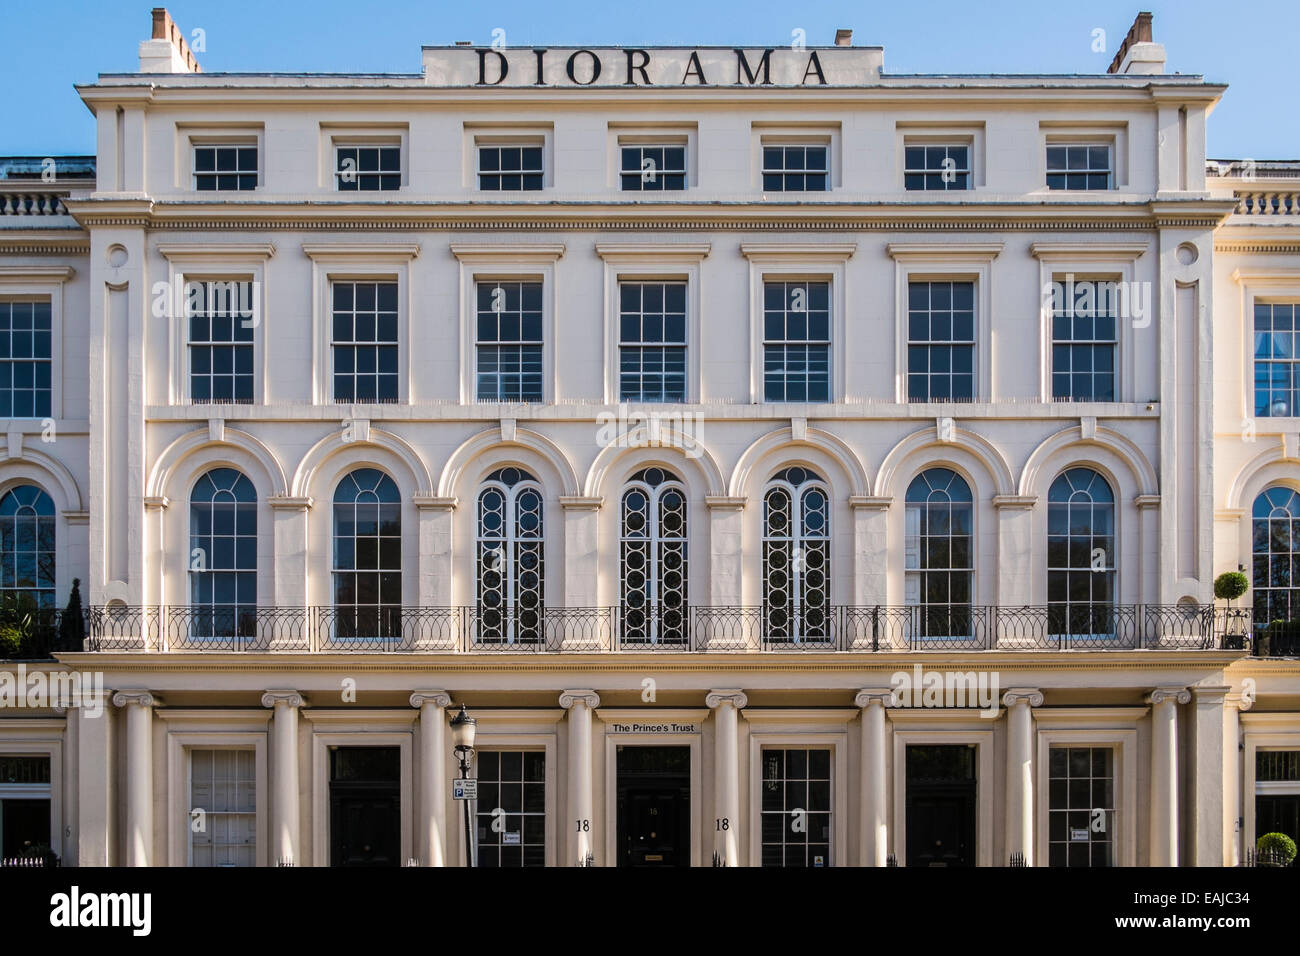 Diorama Arts Building Prince's Trust - Londres Banque D'Images